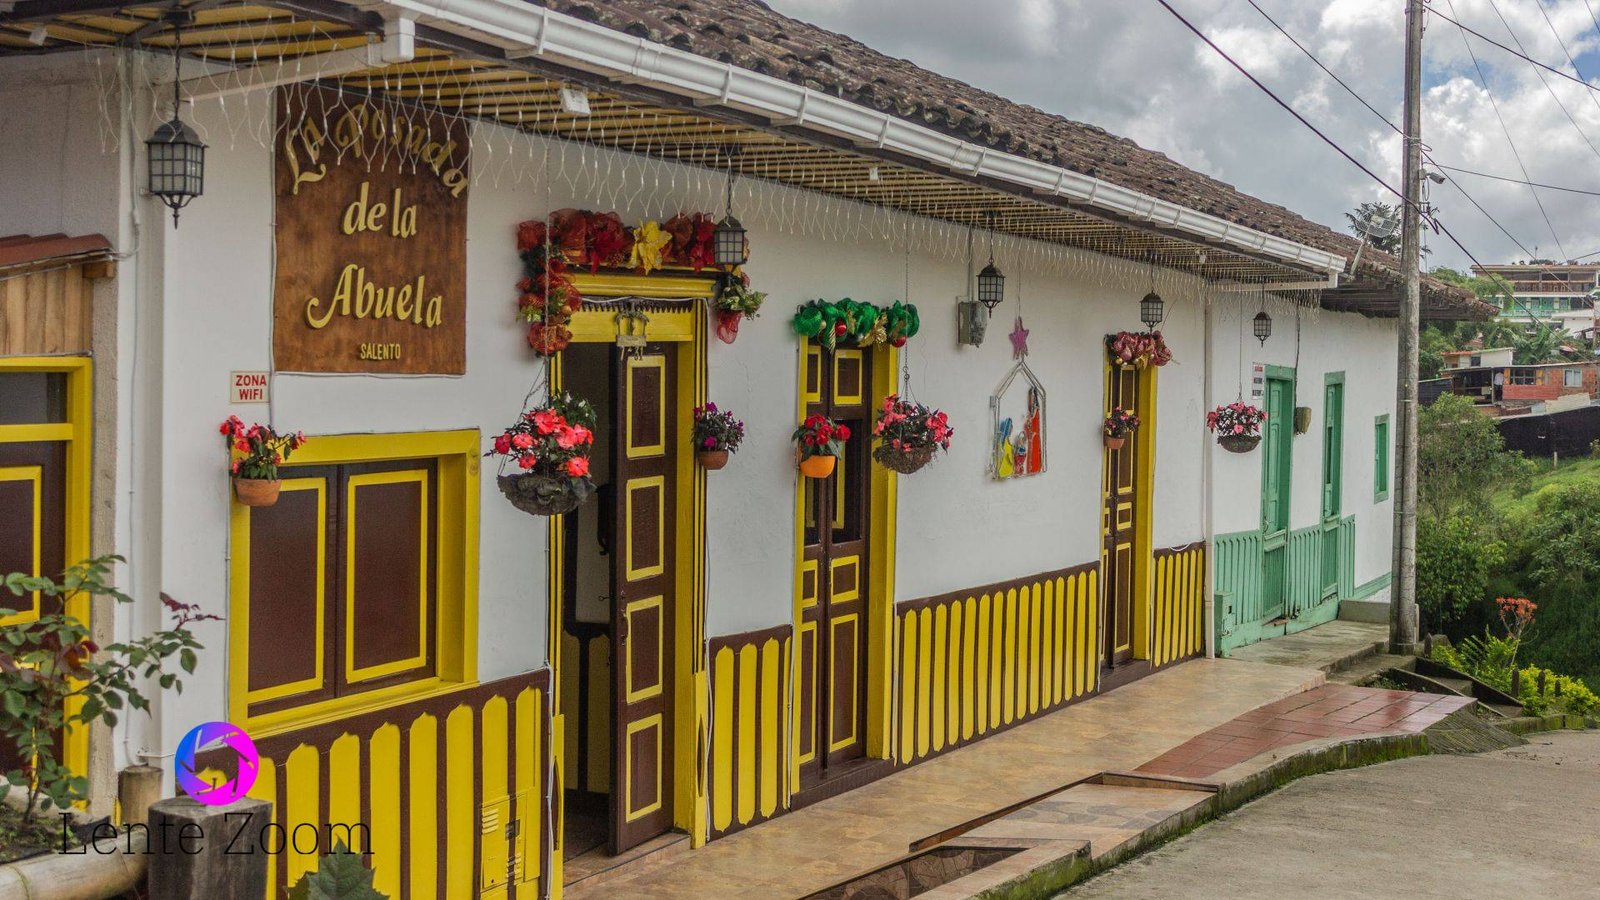 Casas típicas decoradas con flores de diferentes colores